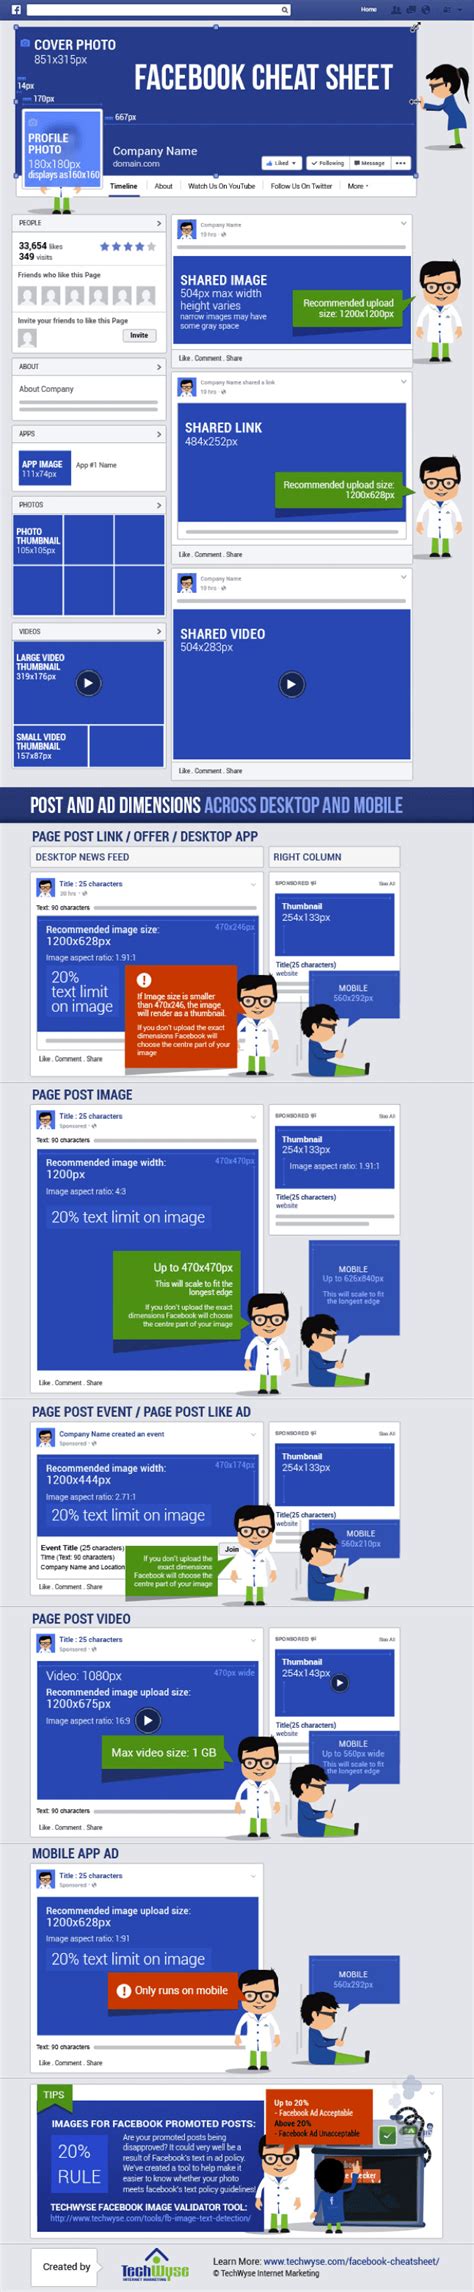 Facebook Cheat Sheet Facebook Sizes Dimensions Infographic Reverasite